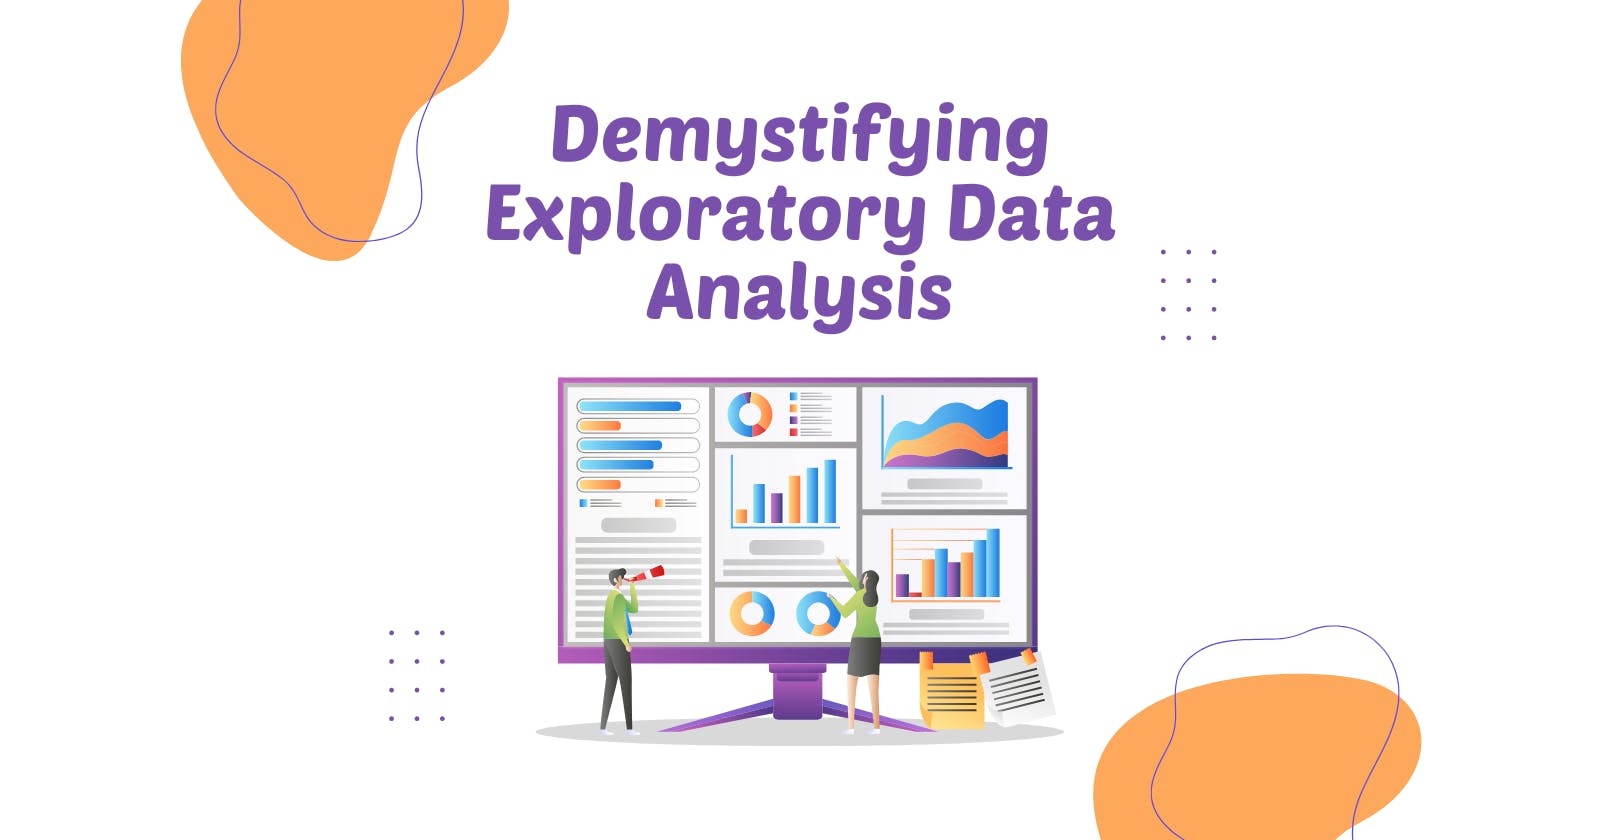 Demystifying Exploratory Data Analysis